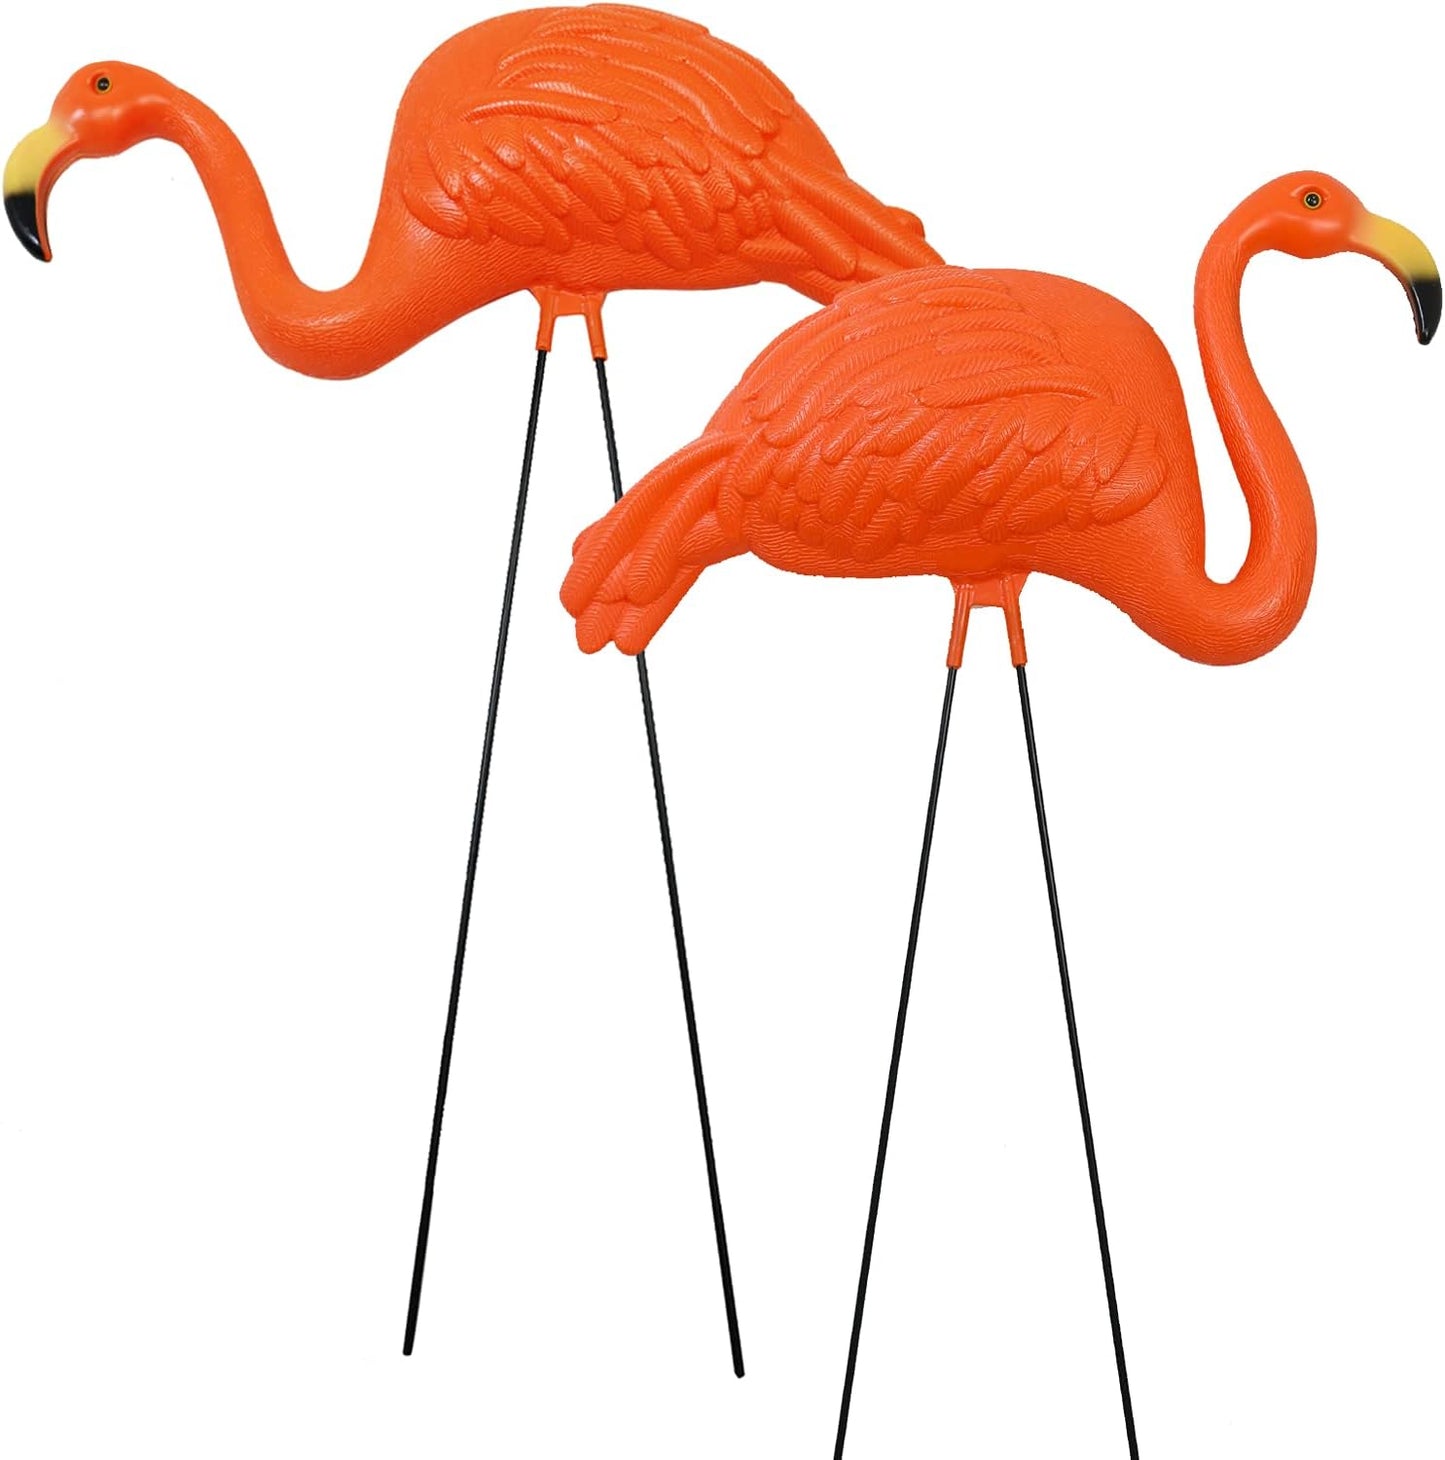 GIFTEXPRESS Thanksgiving Flamingos, Orange Flamingos for Halloween Lawn Ornaments, Fall Décor, Plastic Flamingo Garden Yard Stakes (Pack of 2)